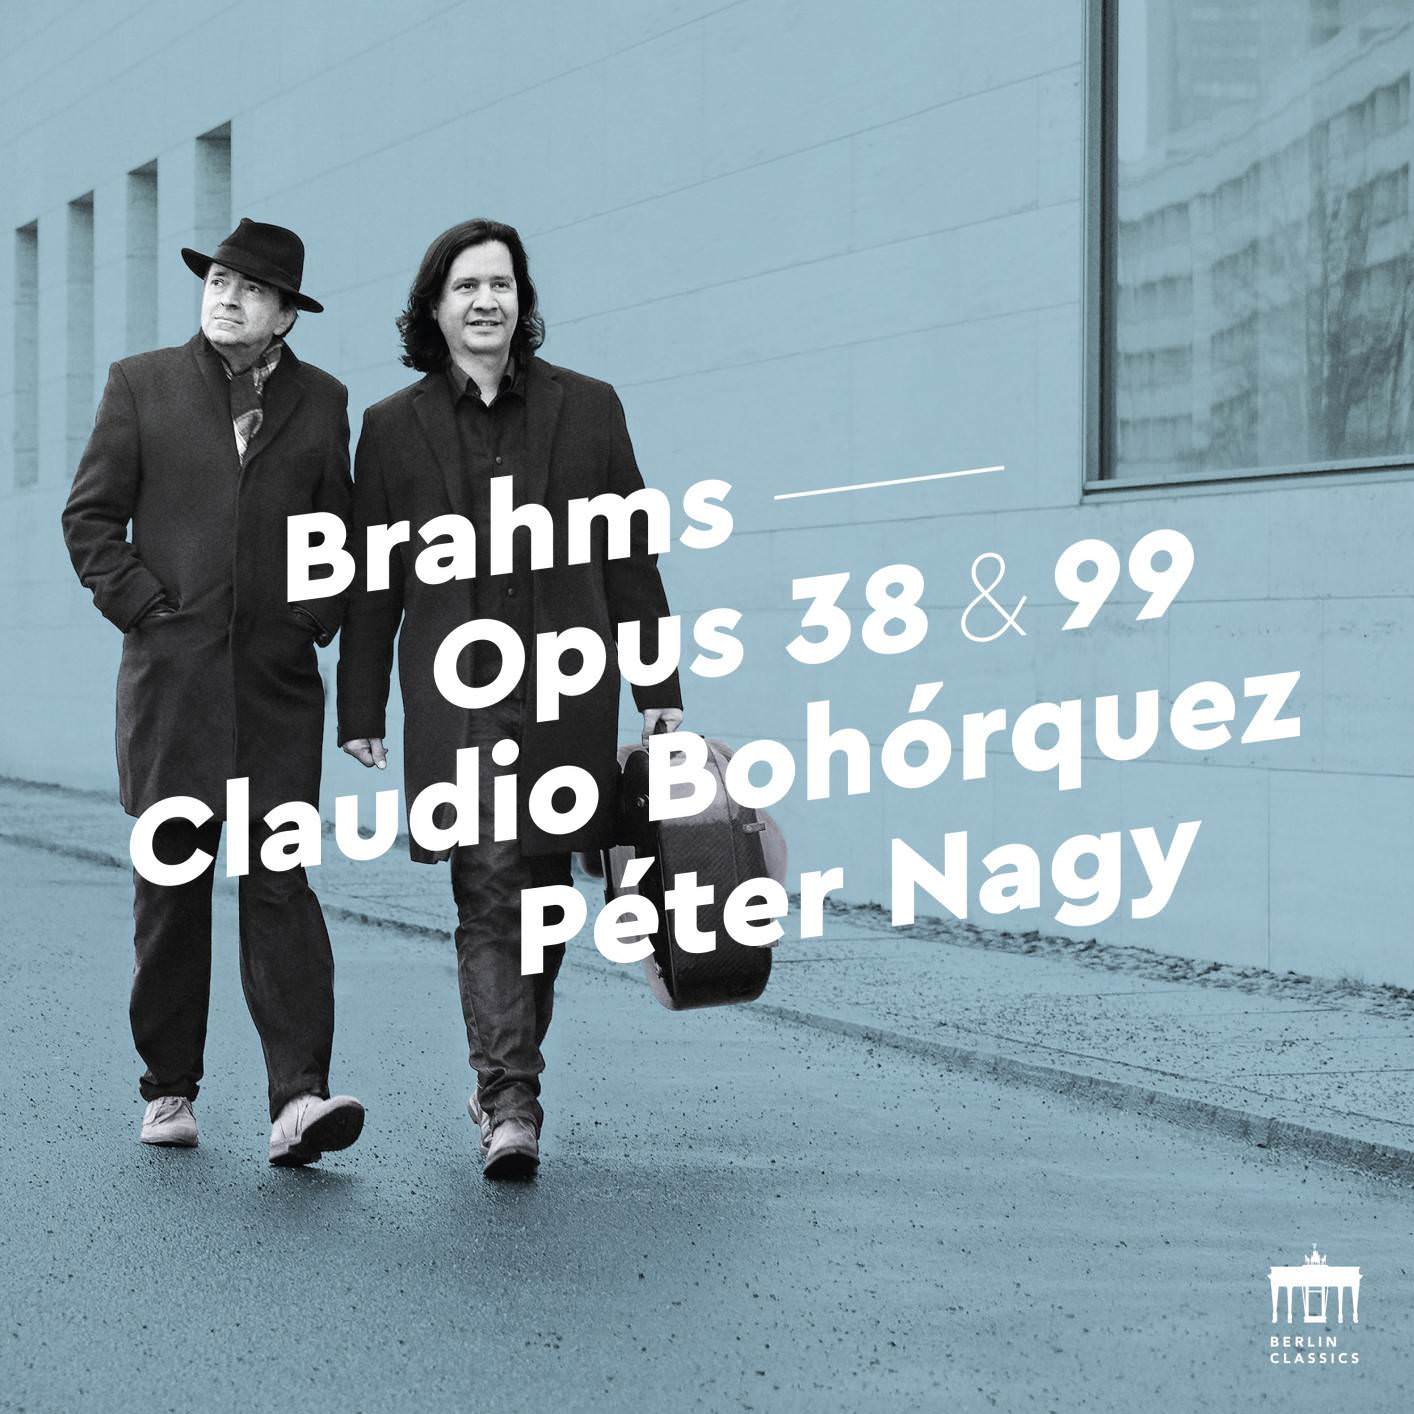 Claudio Bohorquez & Peter Nagy - Brahms: Opus 38 & 99 (Sonatas for Piano and Cello) (2018) [FLAC 24bit/96kHz]